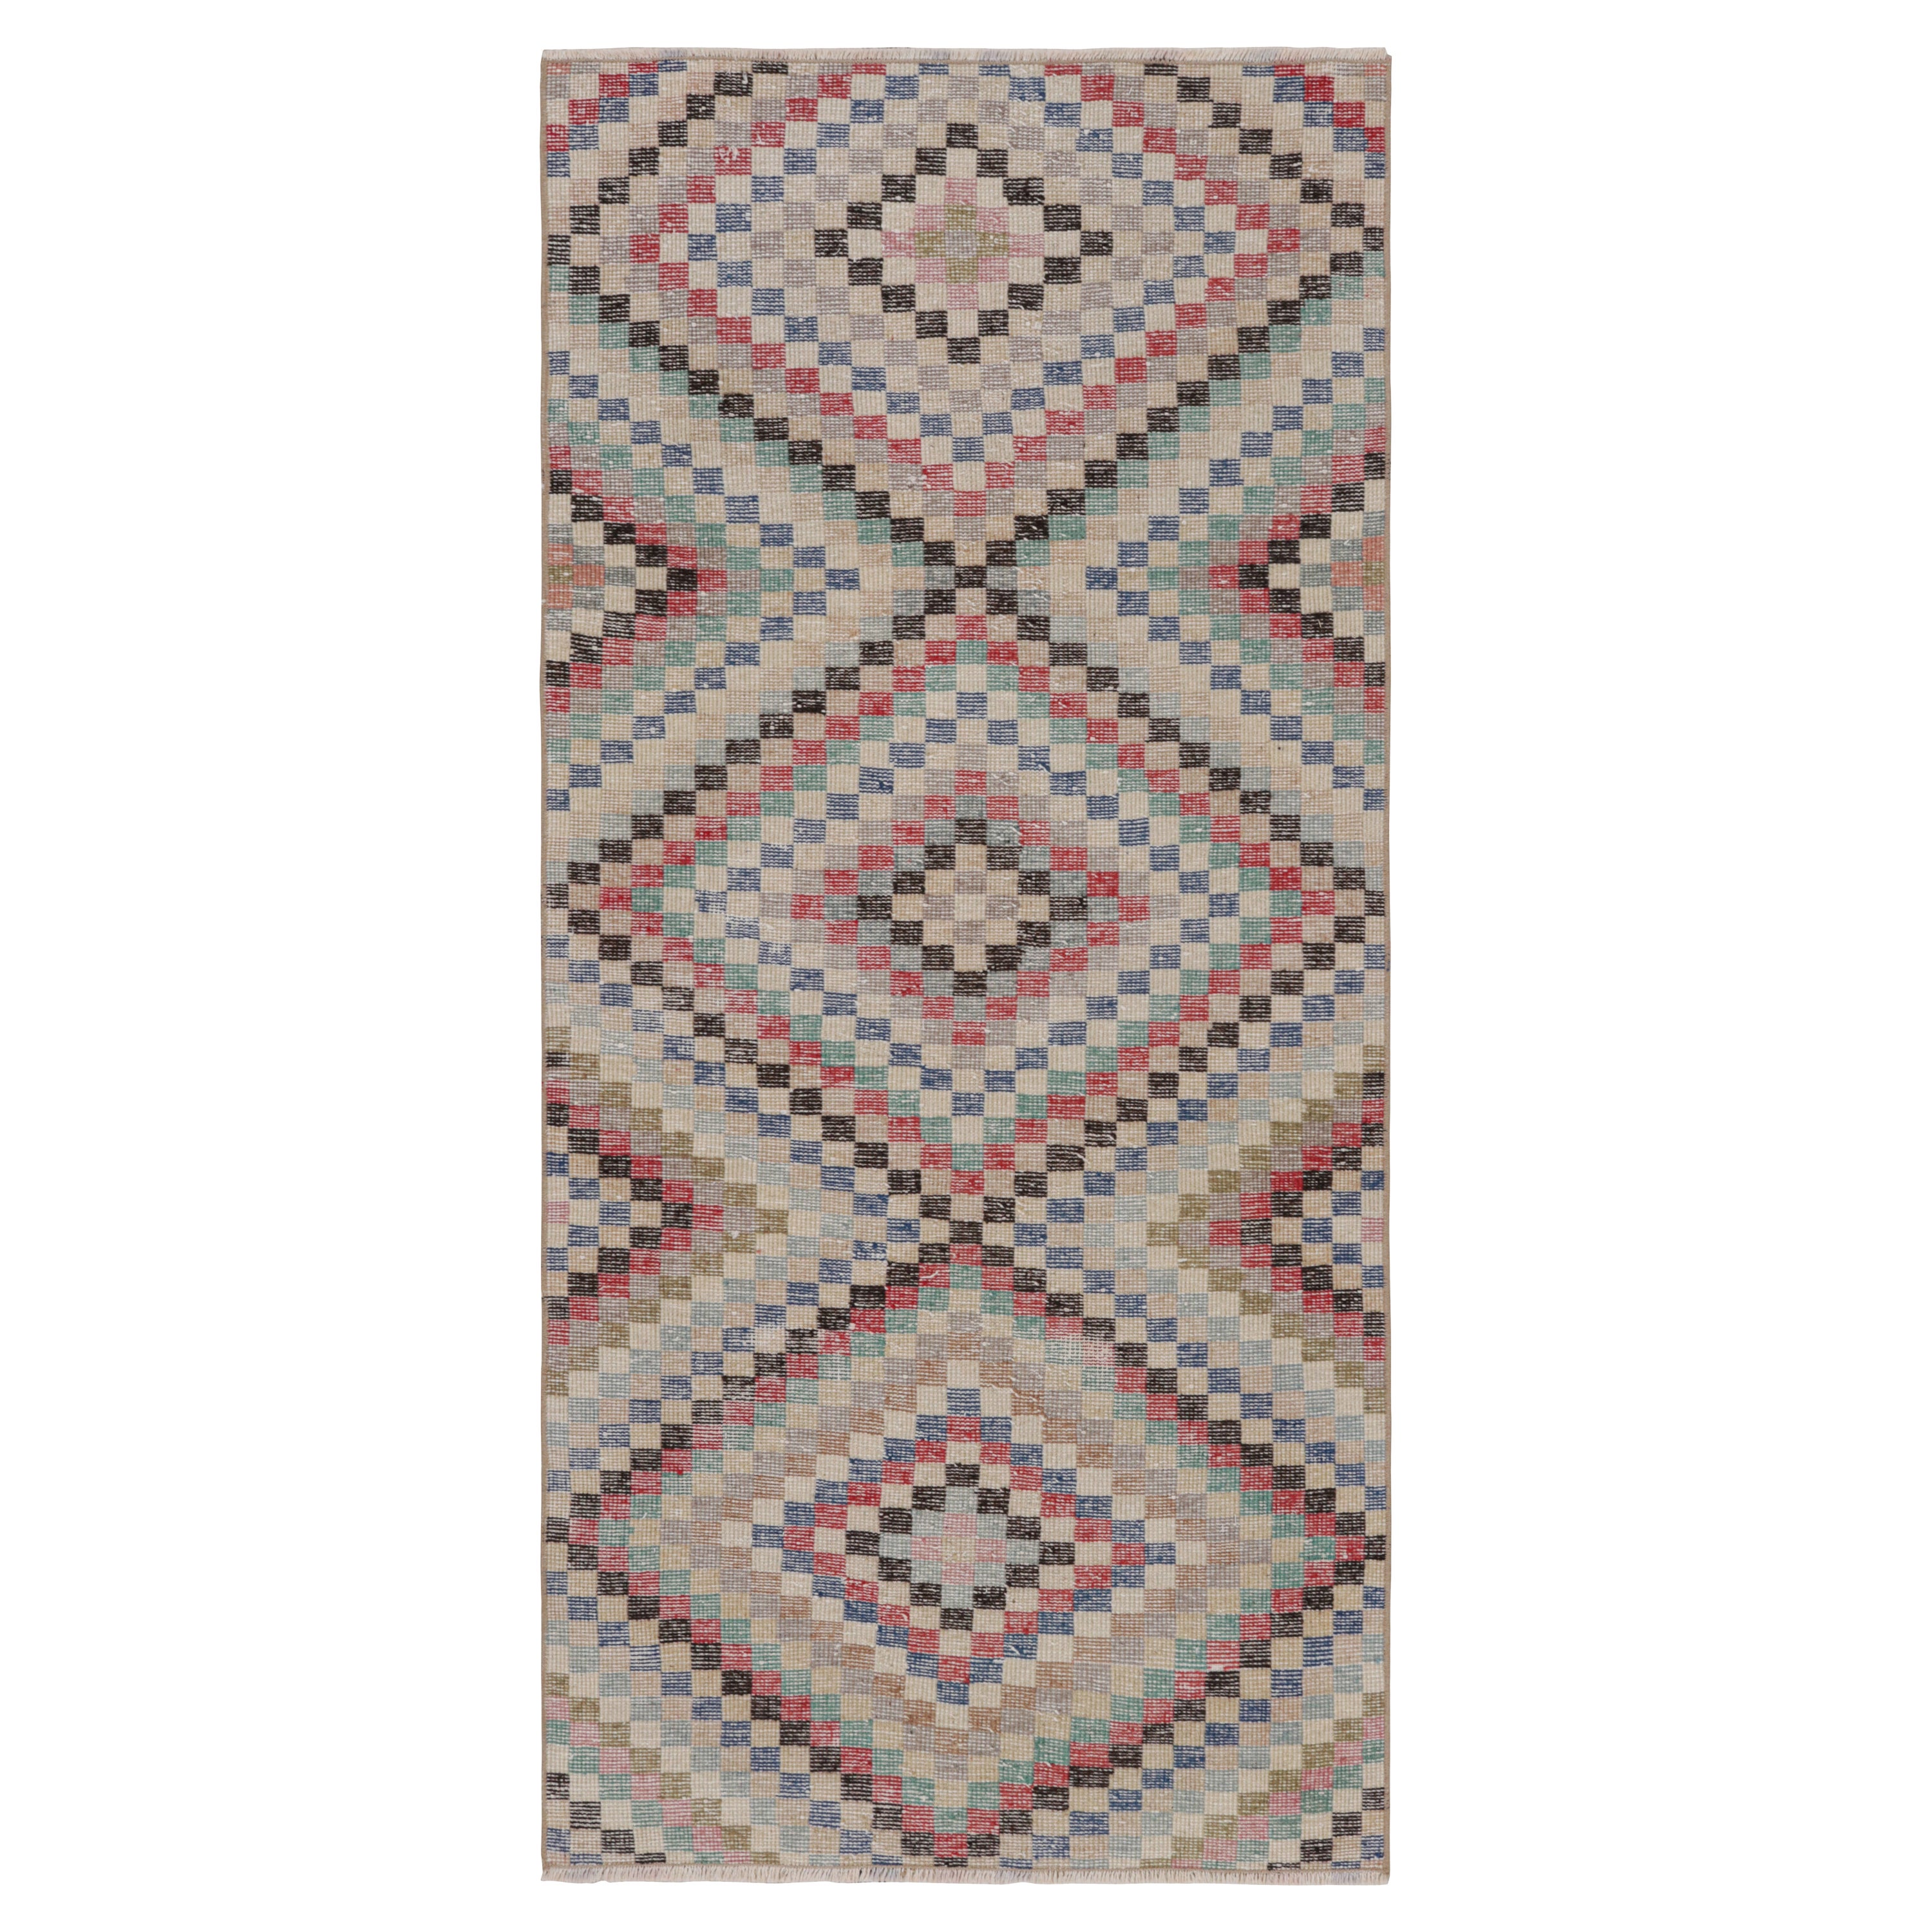 Vintage Zeki Müren Runner Rug, with Geometric Patterns, from Rug & Kilim